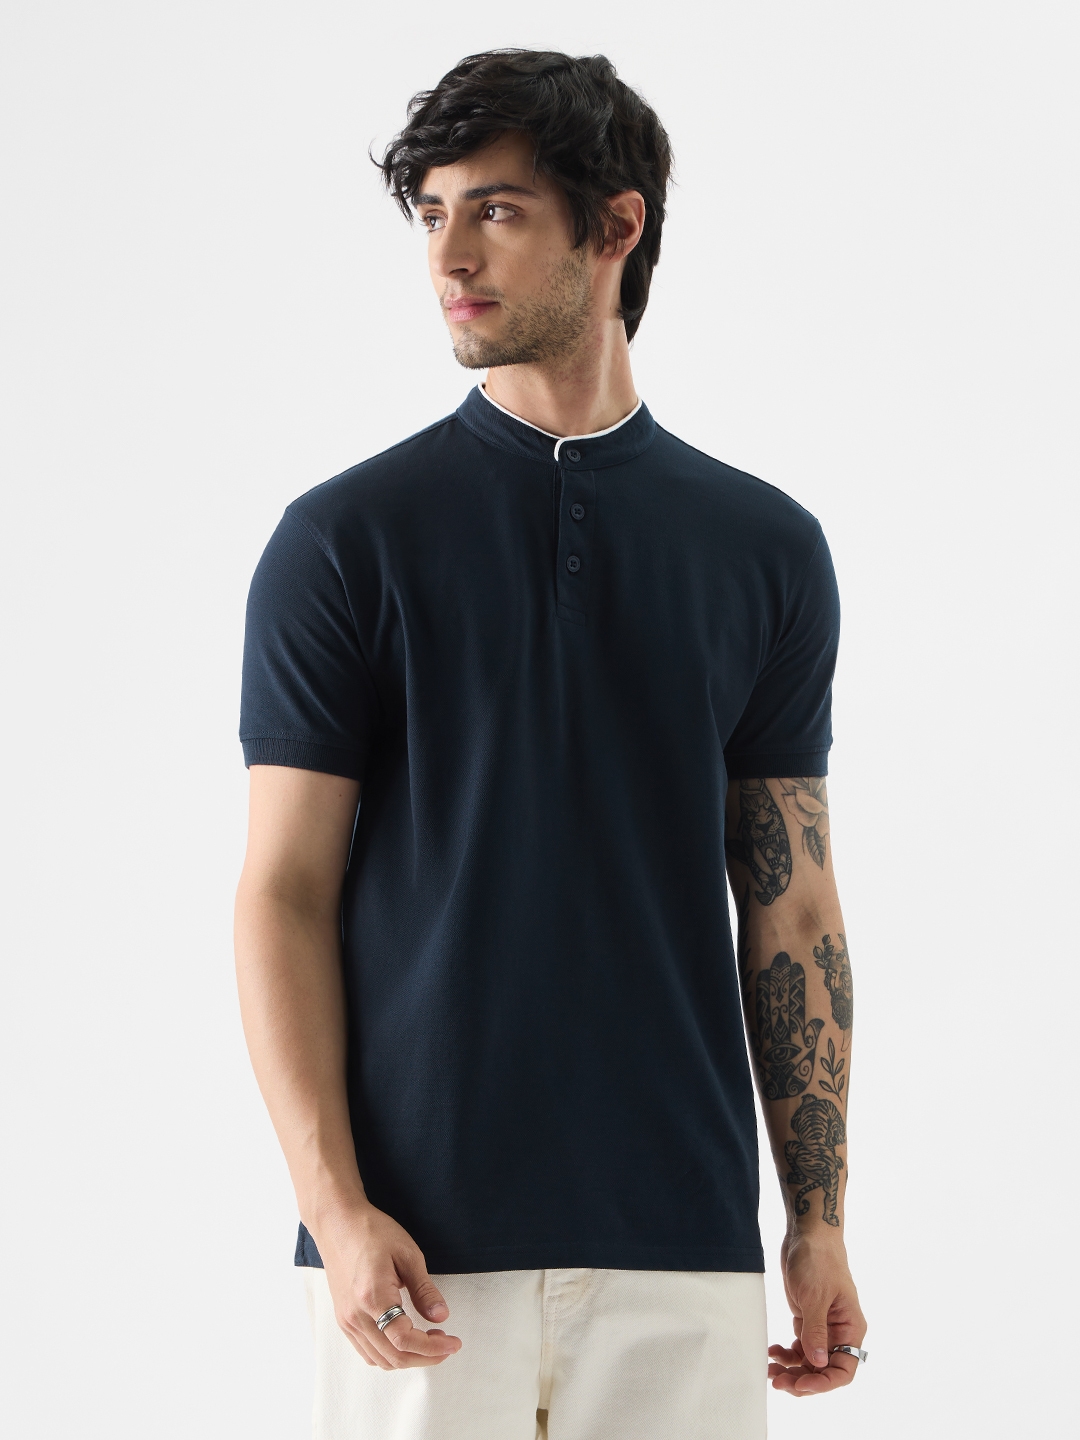 Men's Solids: Navy Mandarin Polo T-Shirt